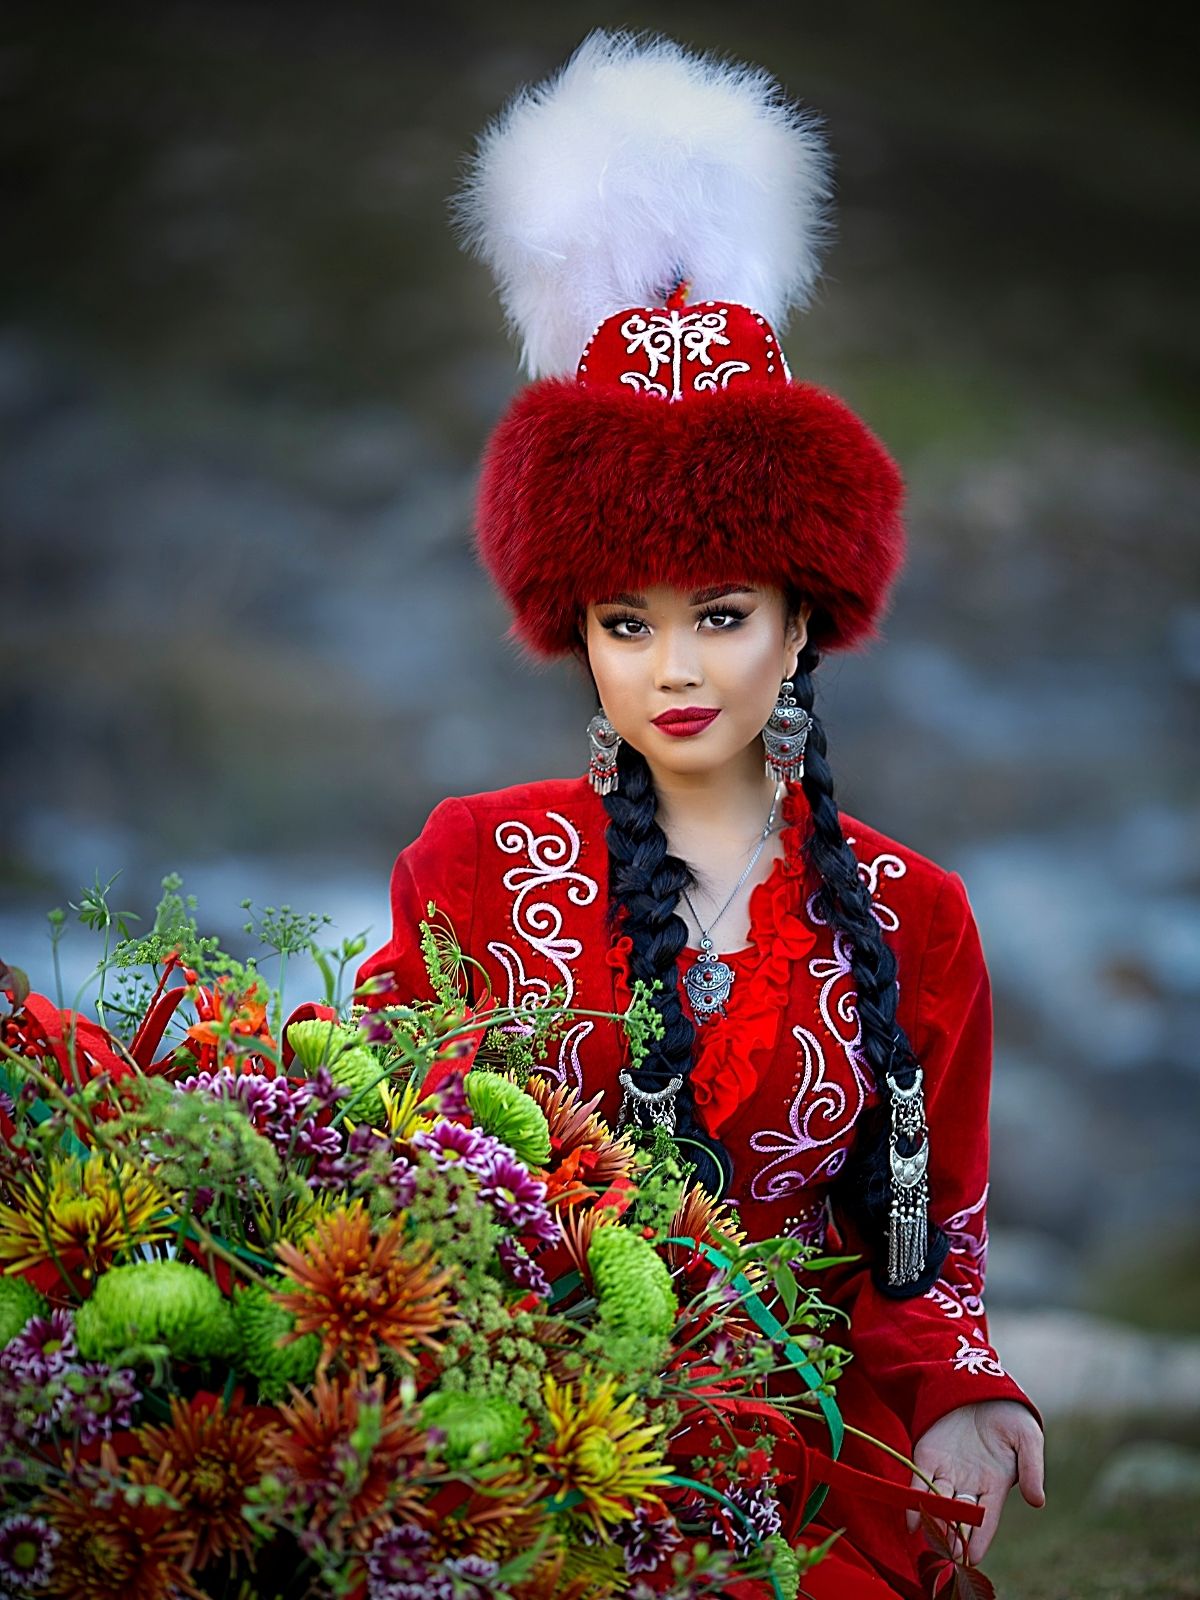 Kyrgyzstan Model with Mixed Bouquet - Petr Anokhin on Thursd.